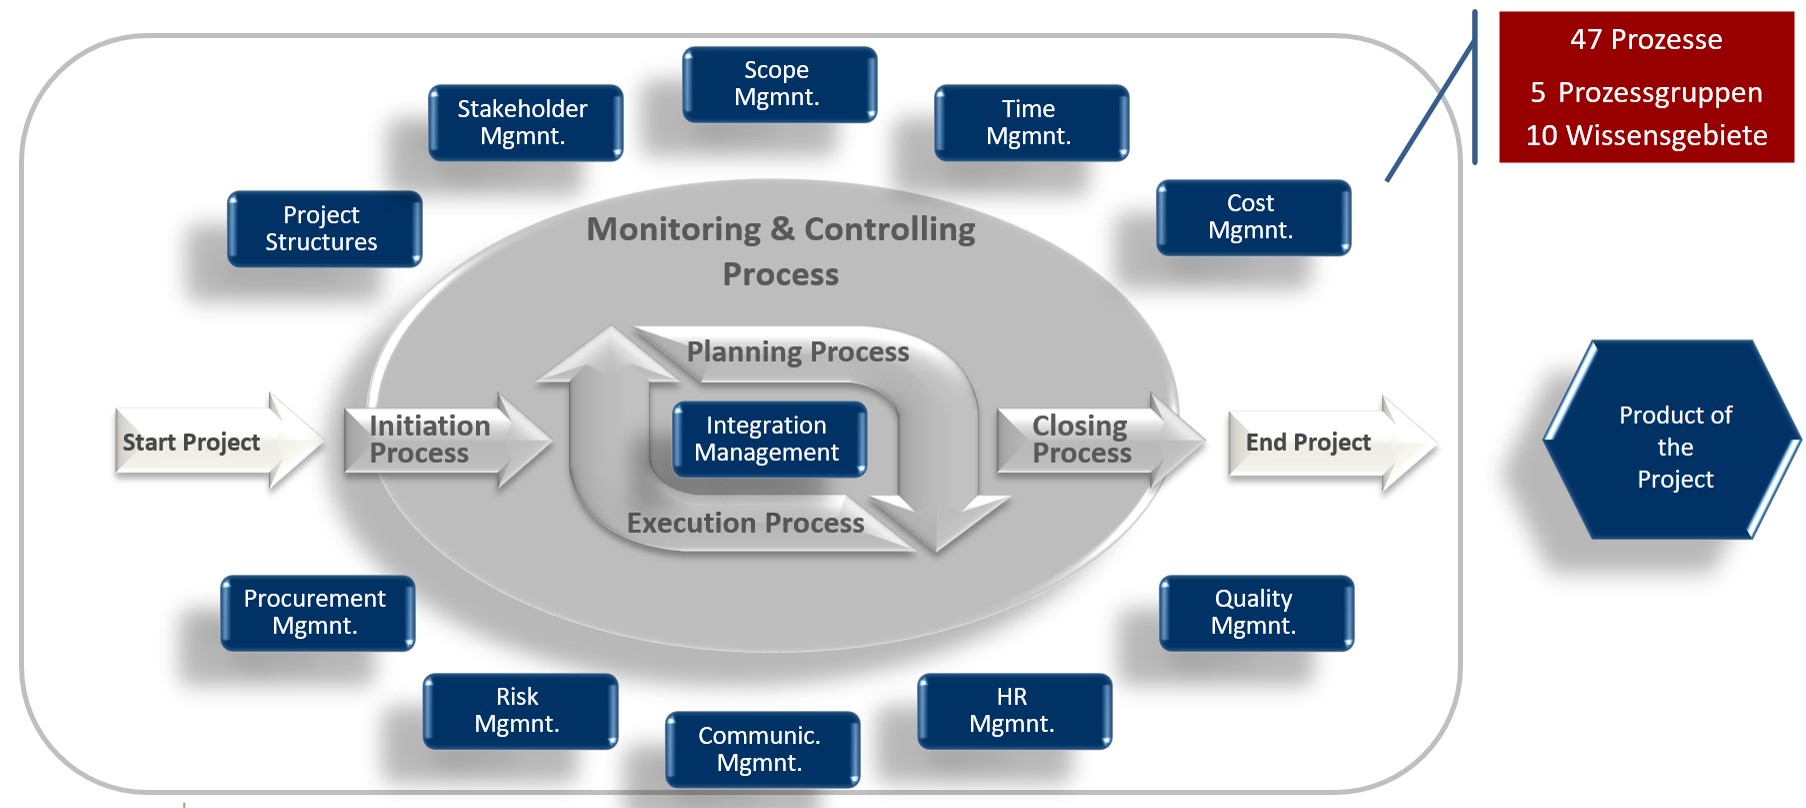 Klassisches Projektmanagement Model nach dem PMBBoK-Gudie des Project Management Institute PMI